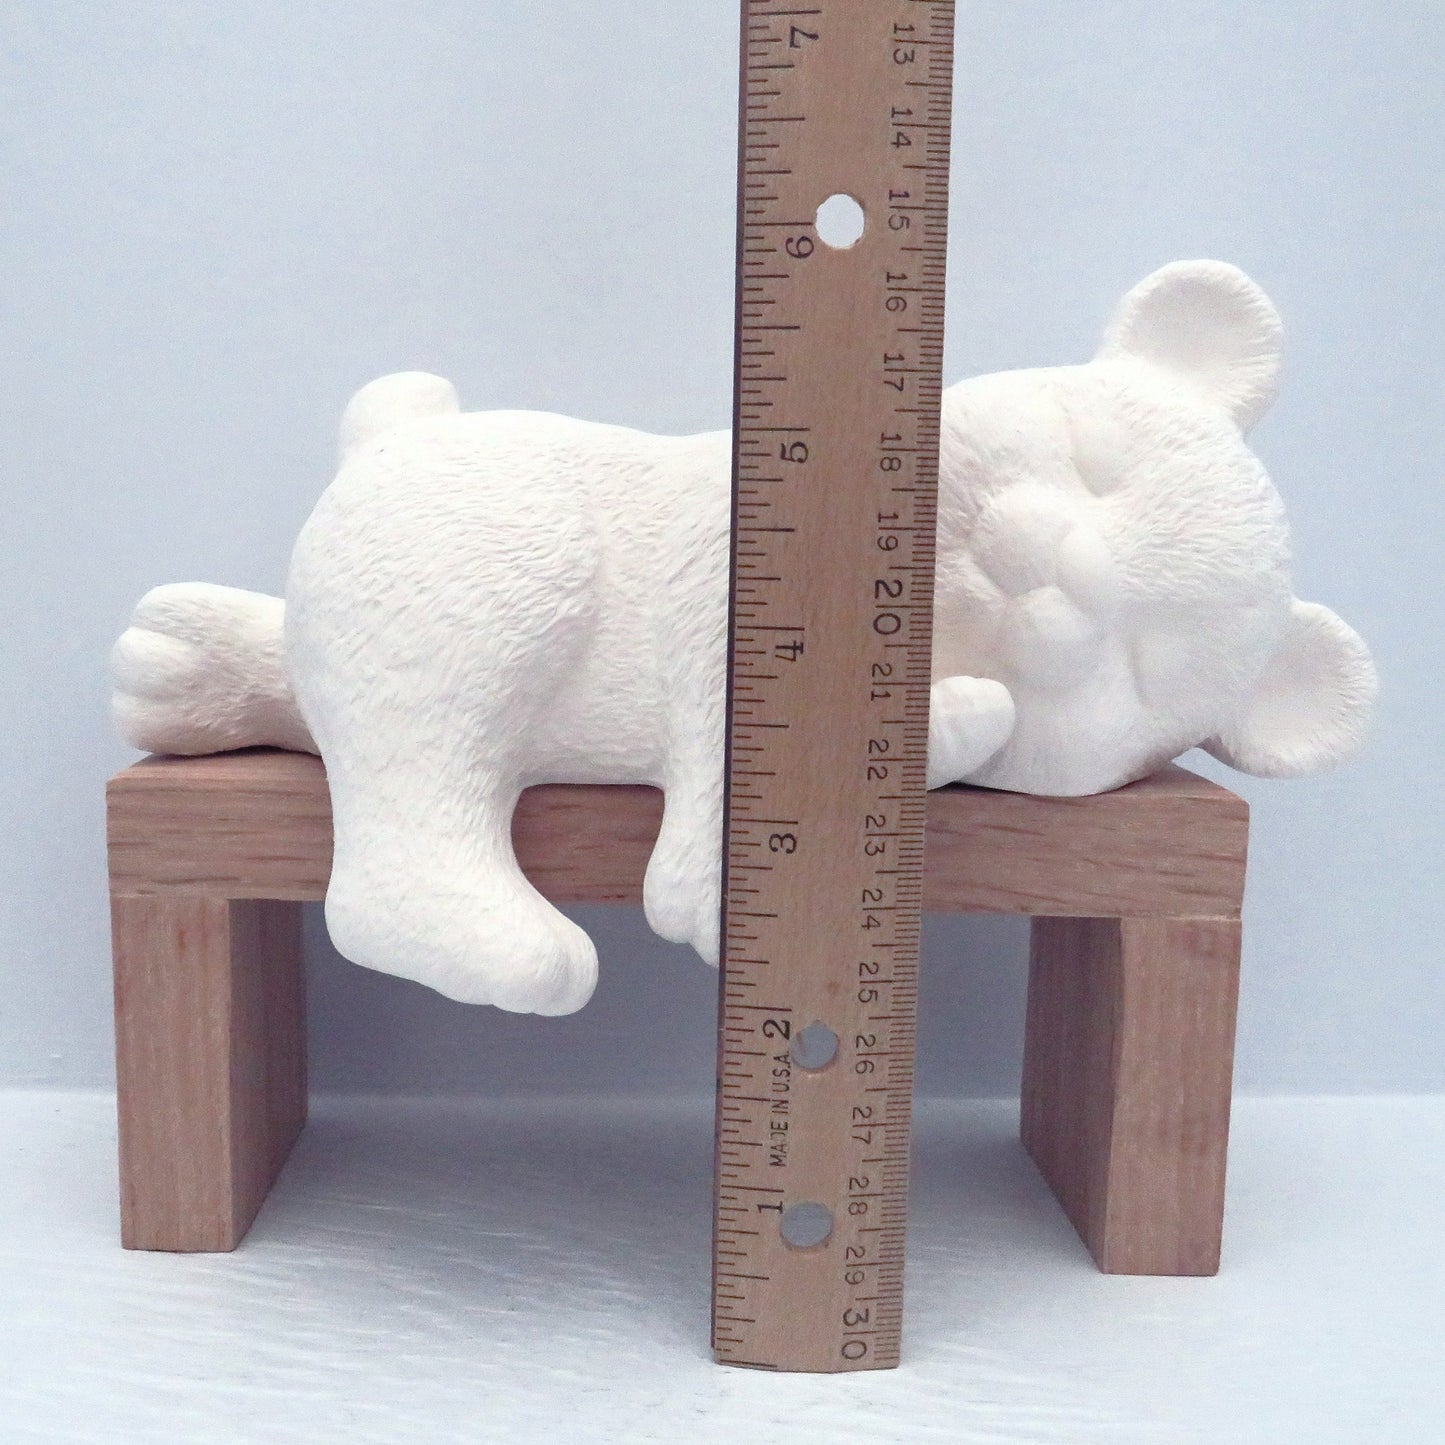 Handmade Unpainted Ceramic Bisque Sleepy Shelf Bear Figurine / Paintable Ceramic Resting Bear Statue / Ceramics to Paint / Ready to Paint